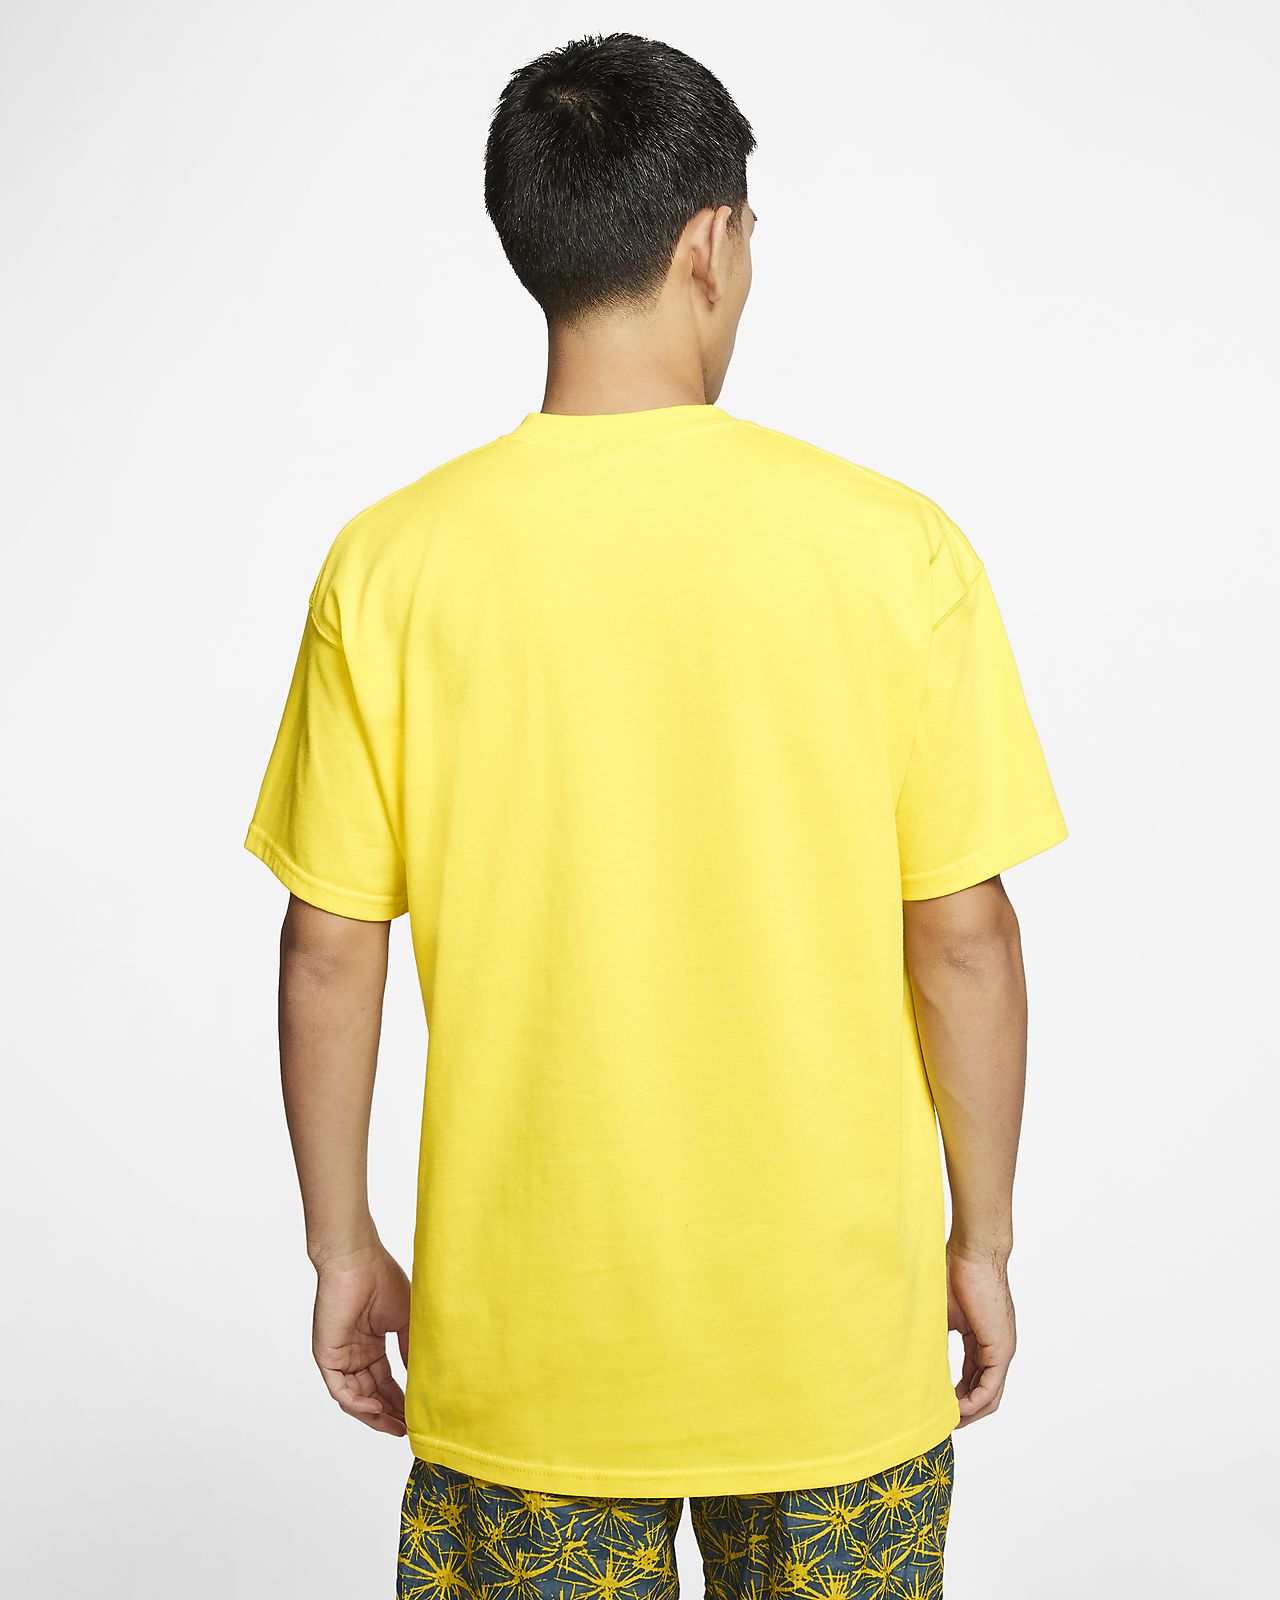 yellow t shirt nike